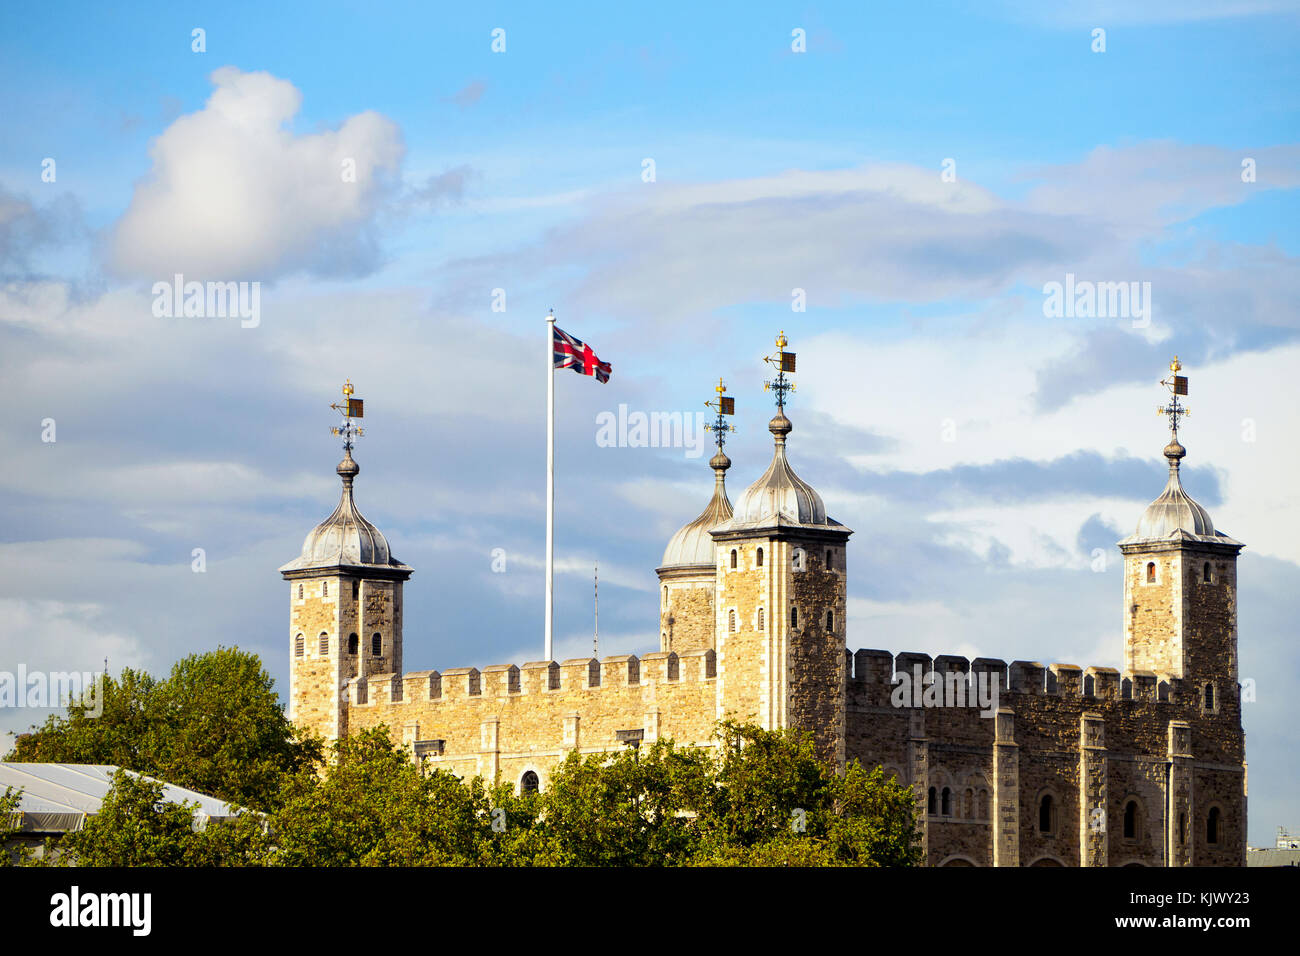 La torre di Londra - Inghilterra Foto Stock